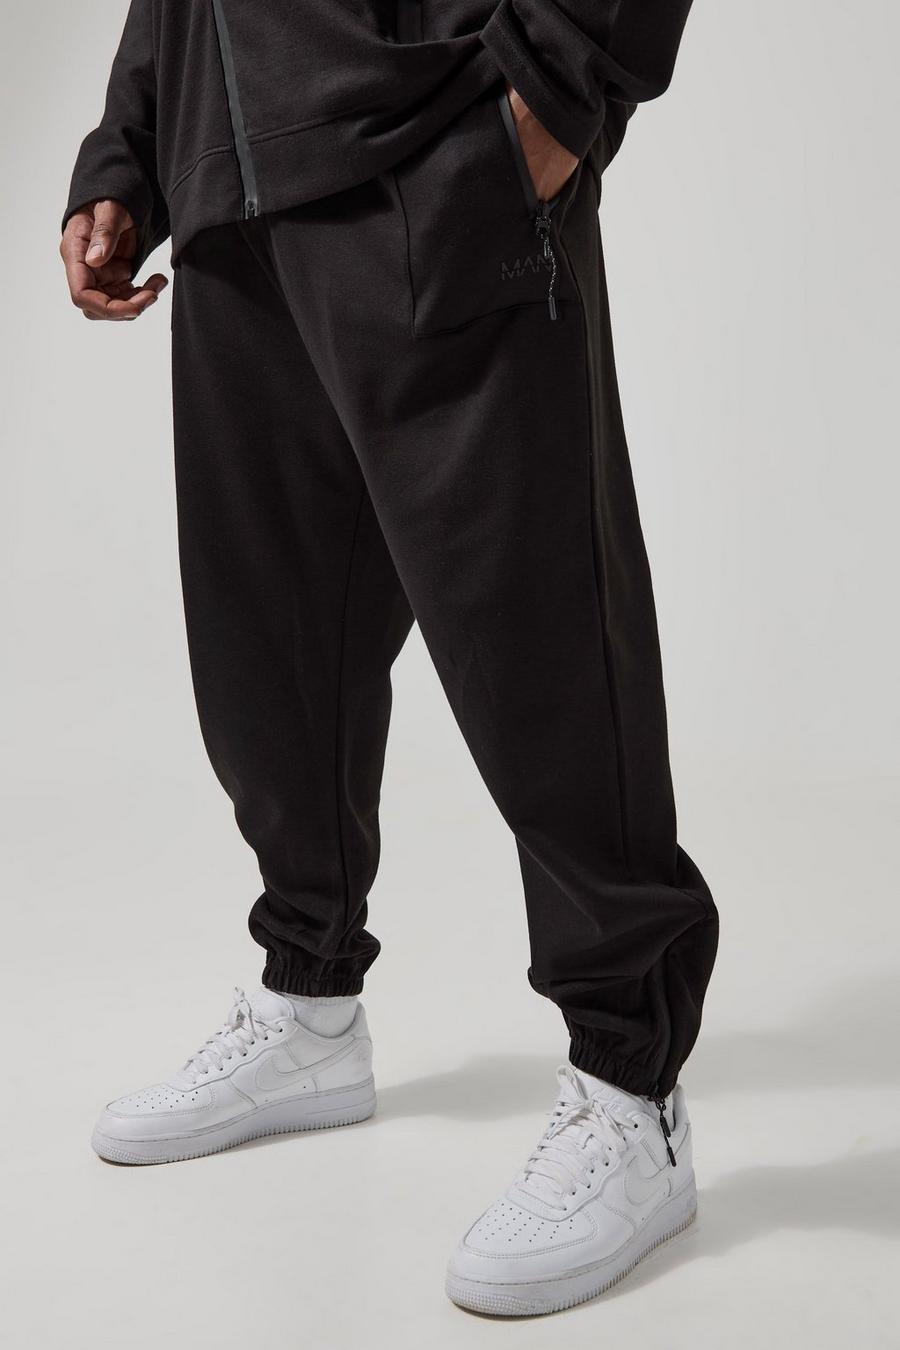 Pantaloni tuta Plus Size Man Active Tech con zip sul fondo, Black